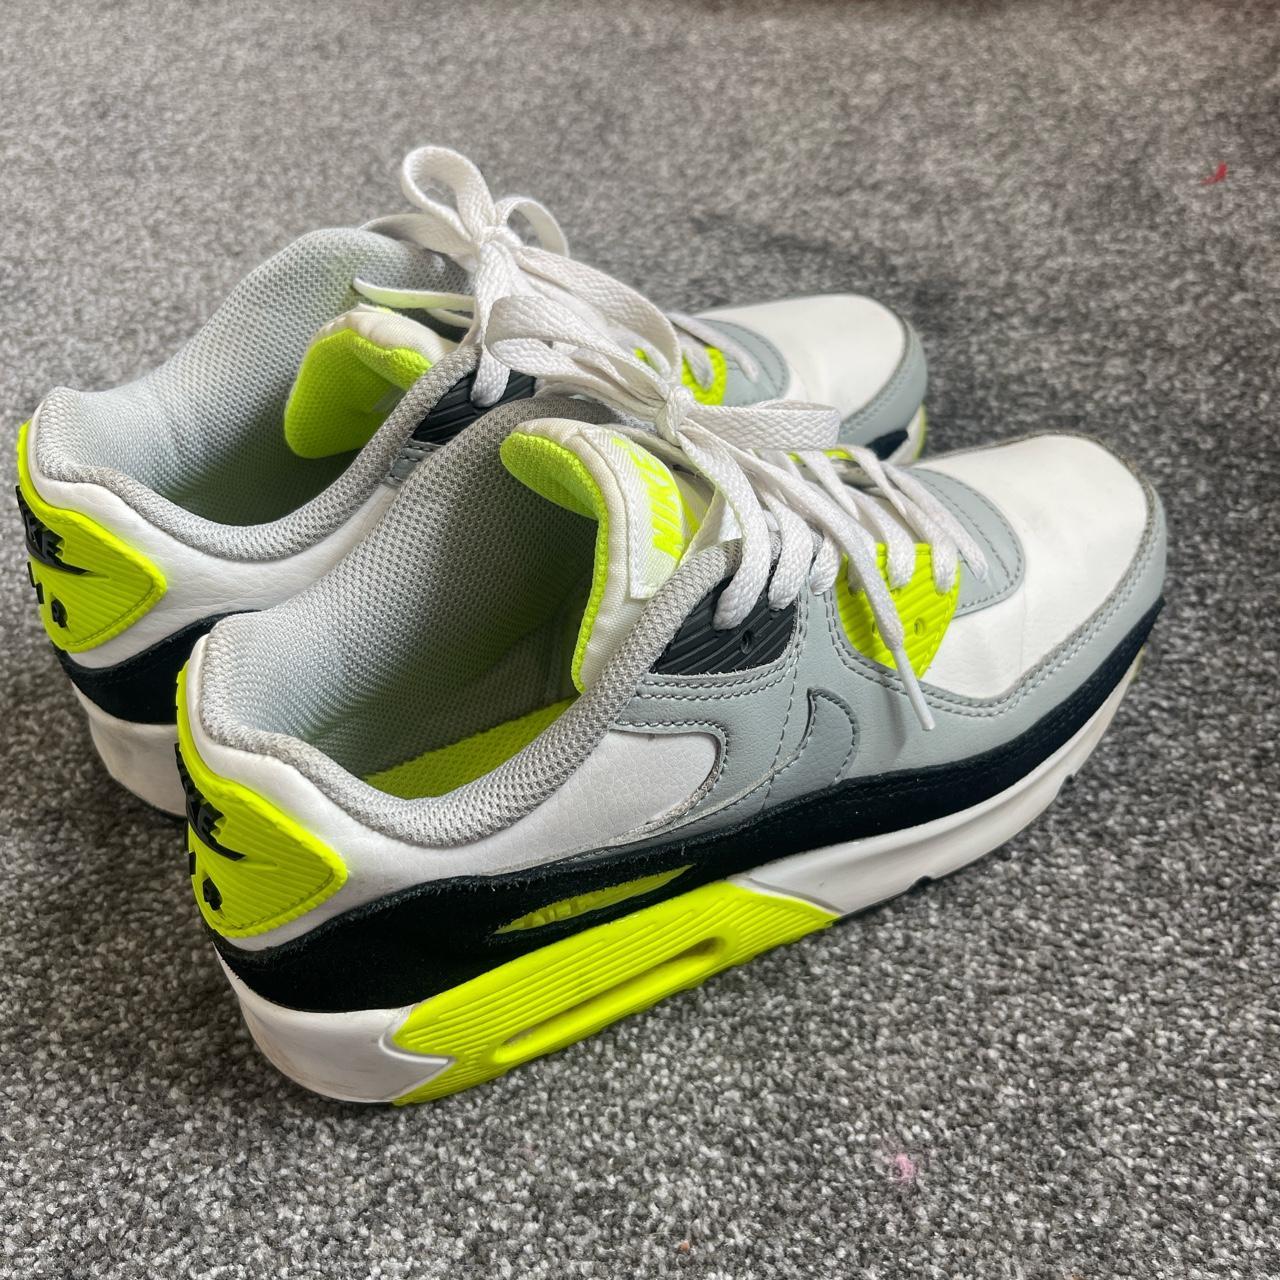 Neon green yellow air max 90 Nike Size 5 Worn, in... - Depop